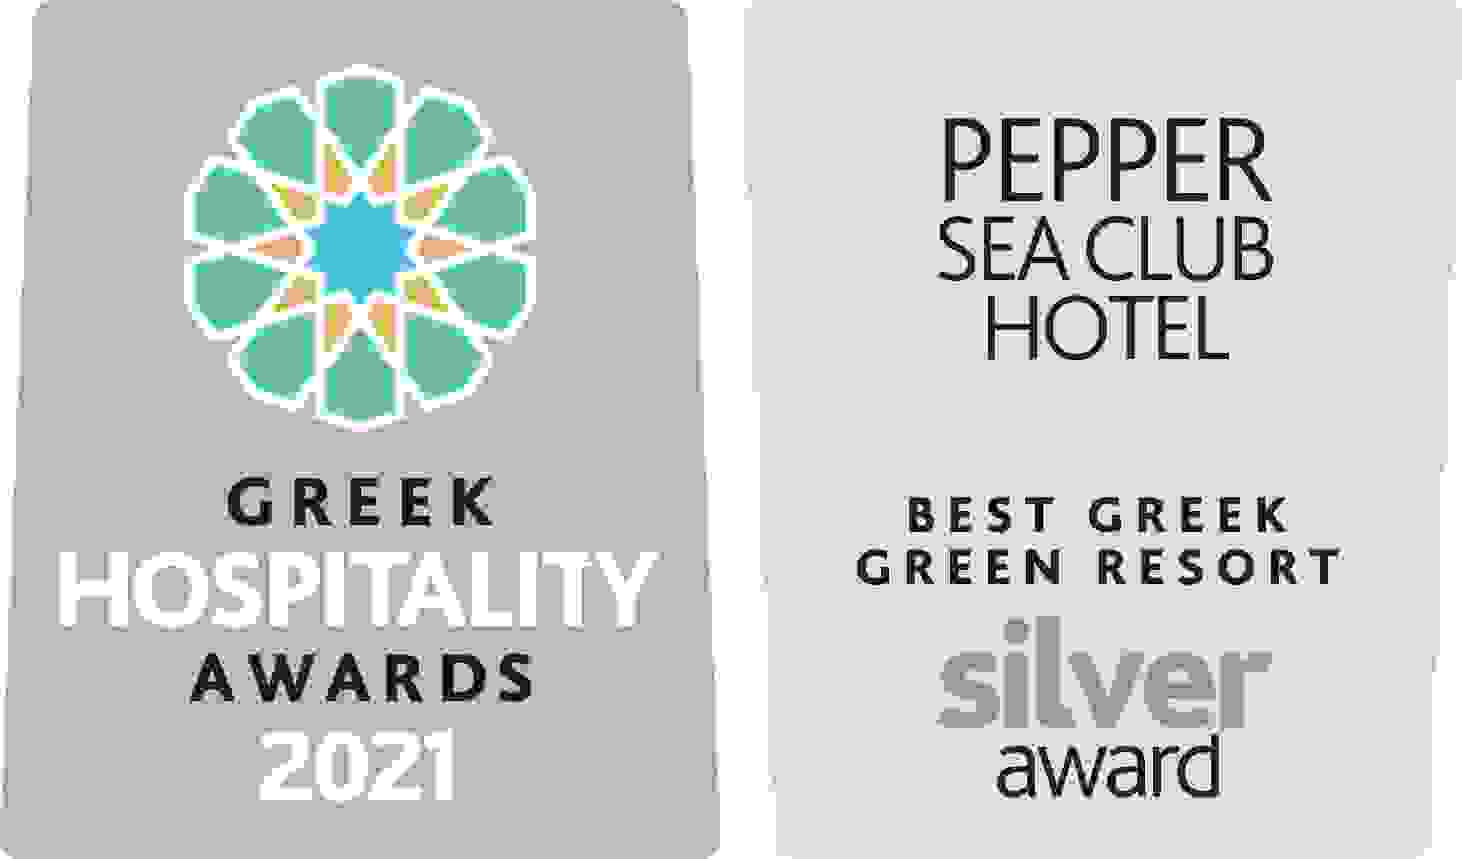 Greek Hospitality Awards - Best Greek Green Resort